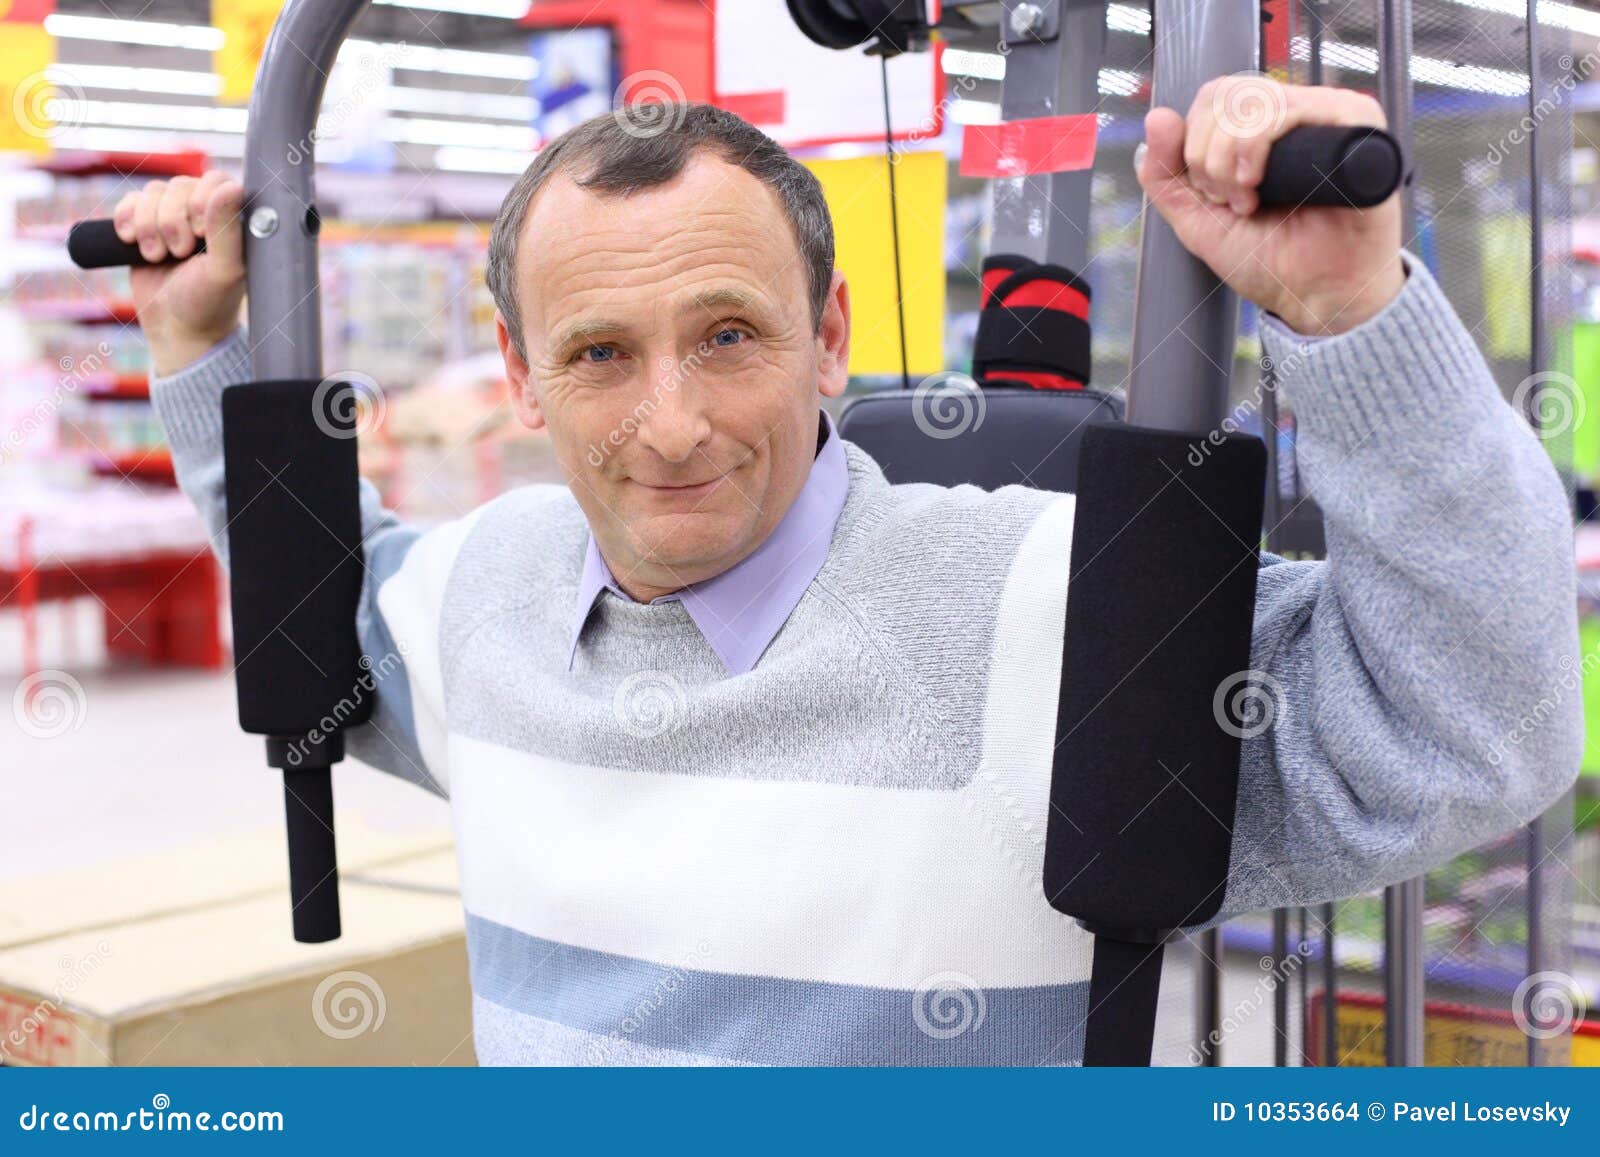 elderly man in shop on sports exerciser